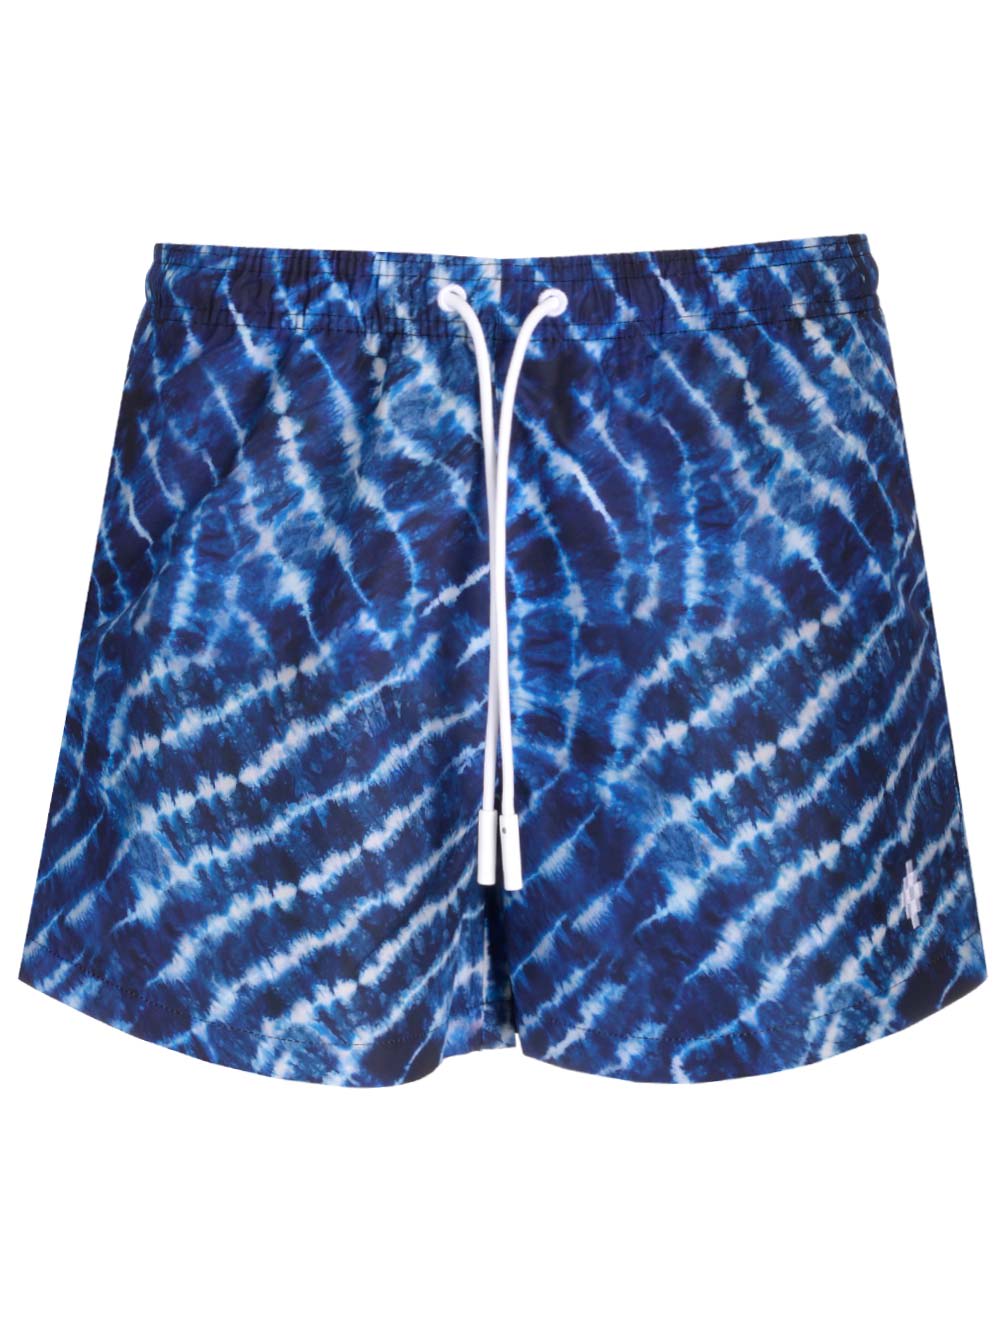 soundwaves Swim Shorts